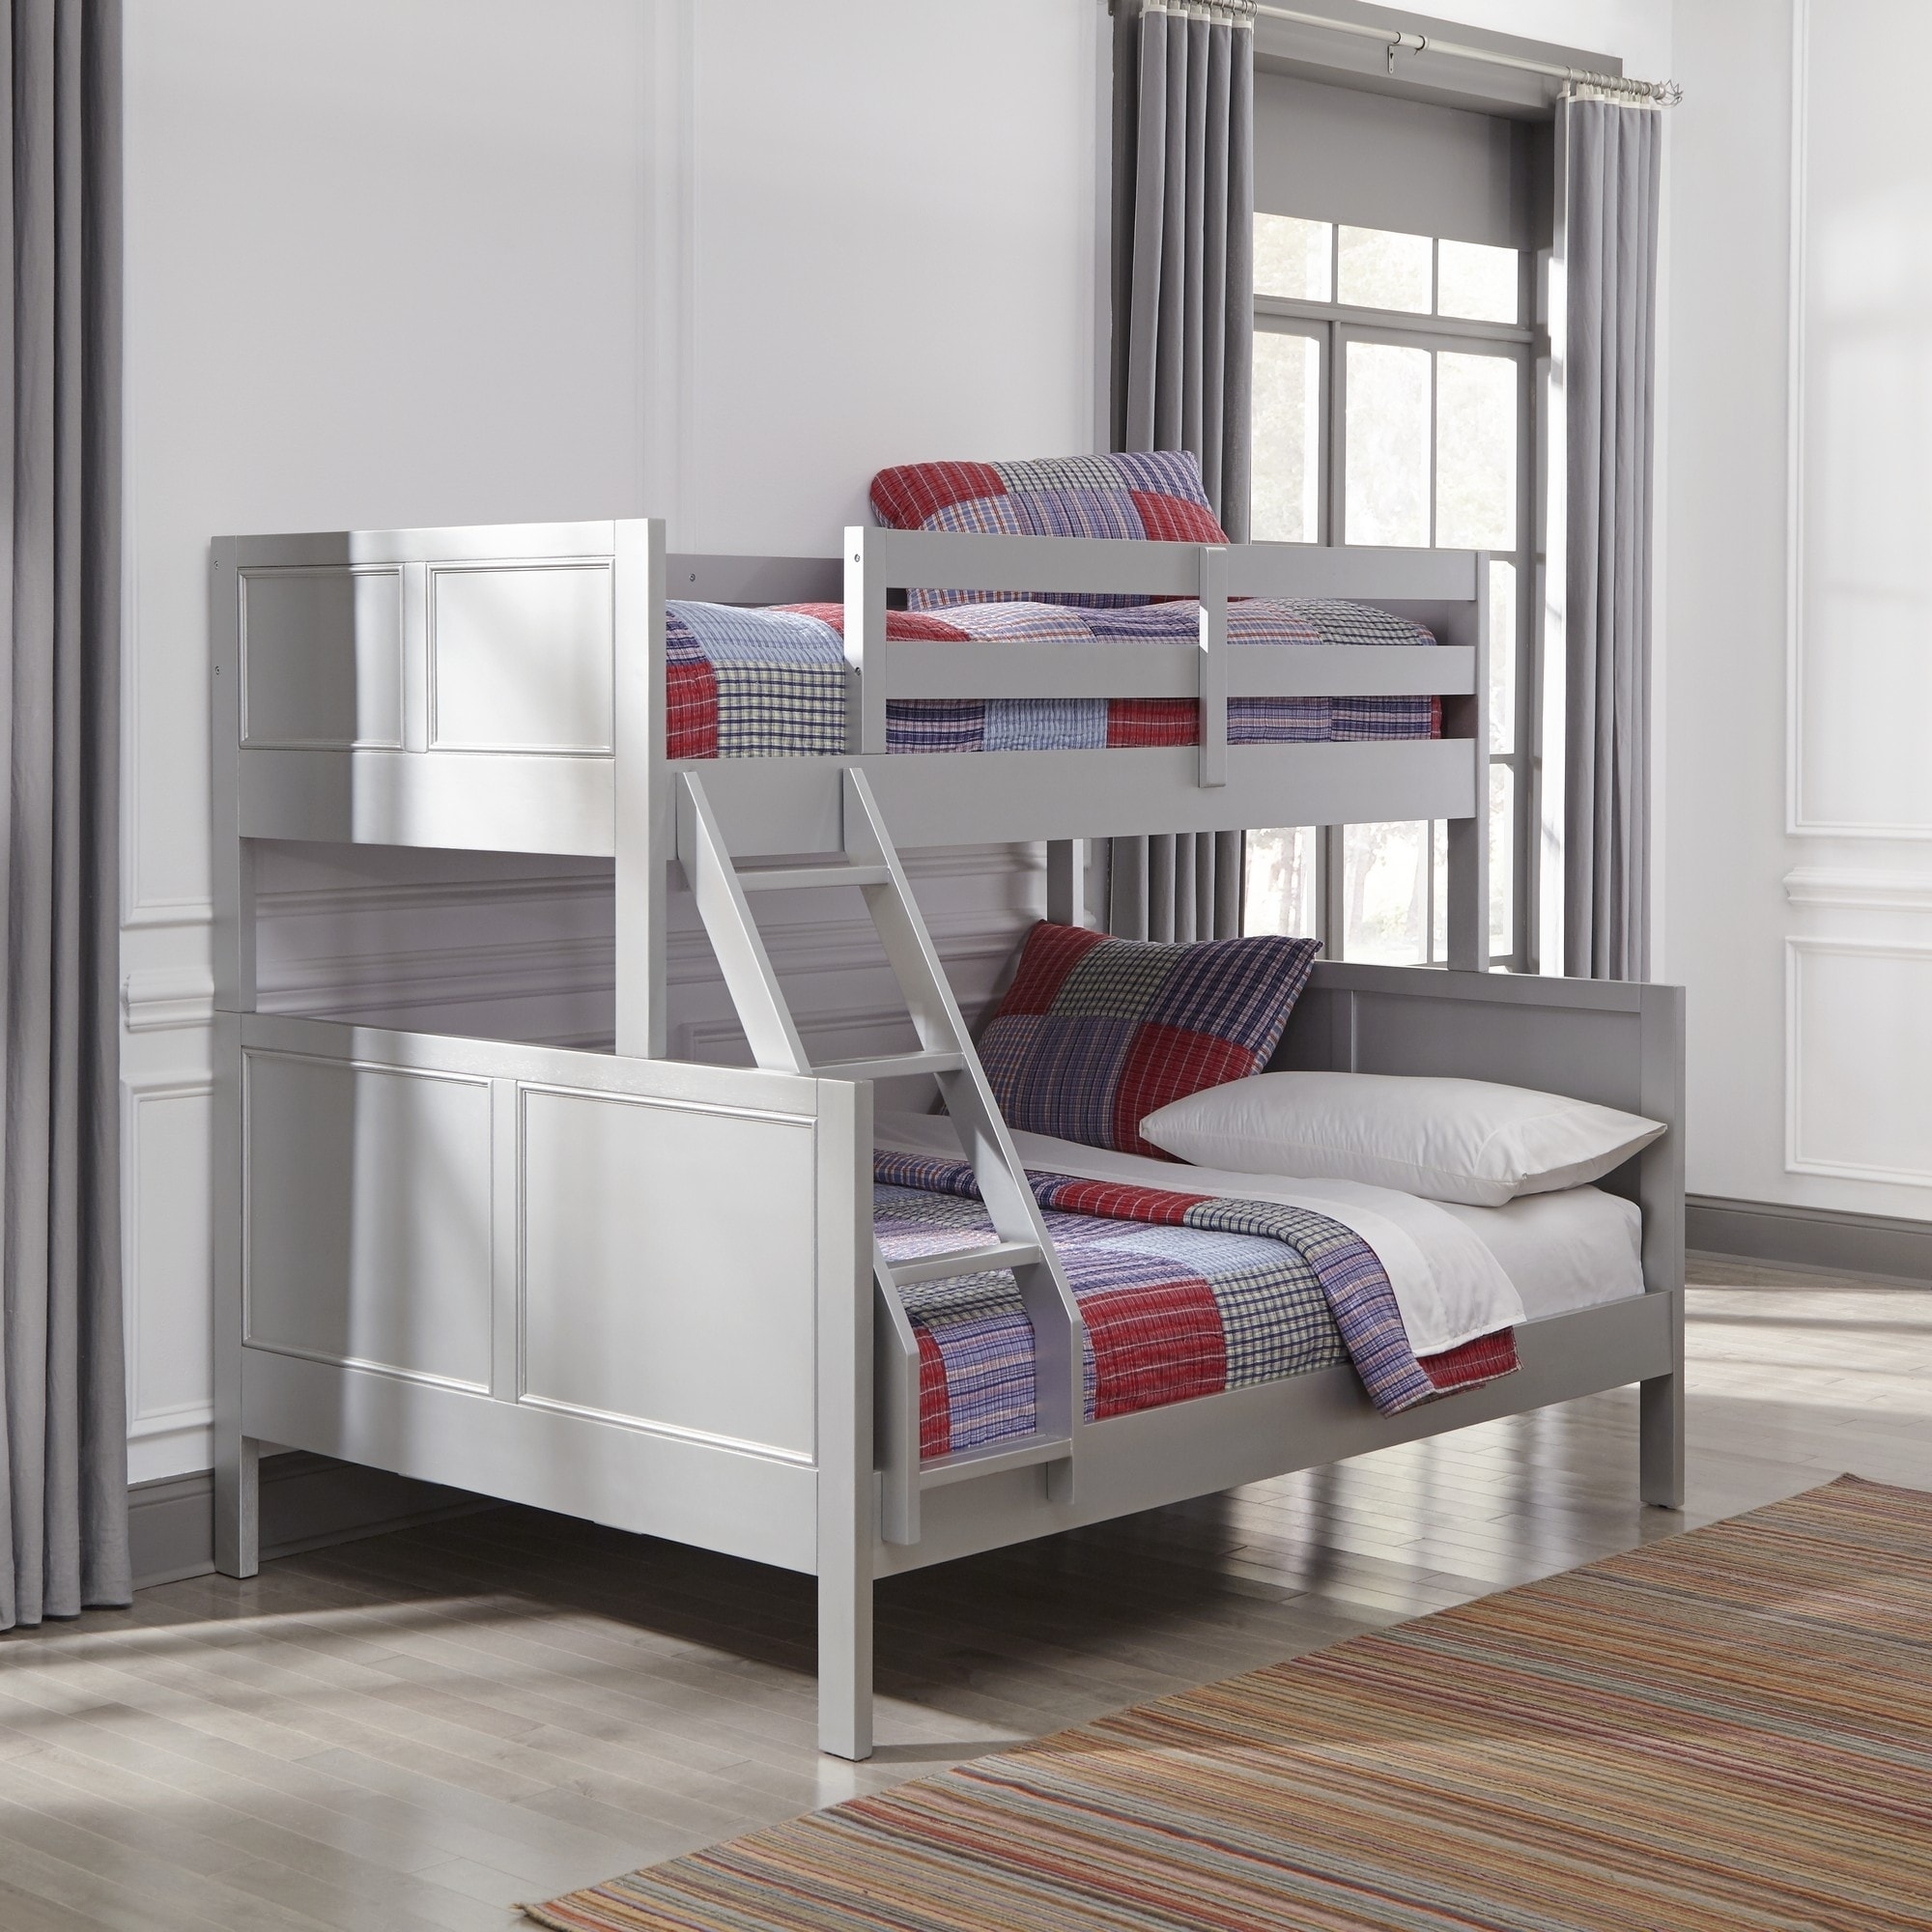 grey wooden bunk beds